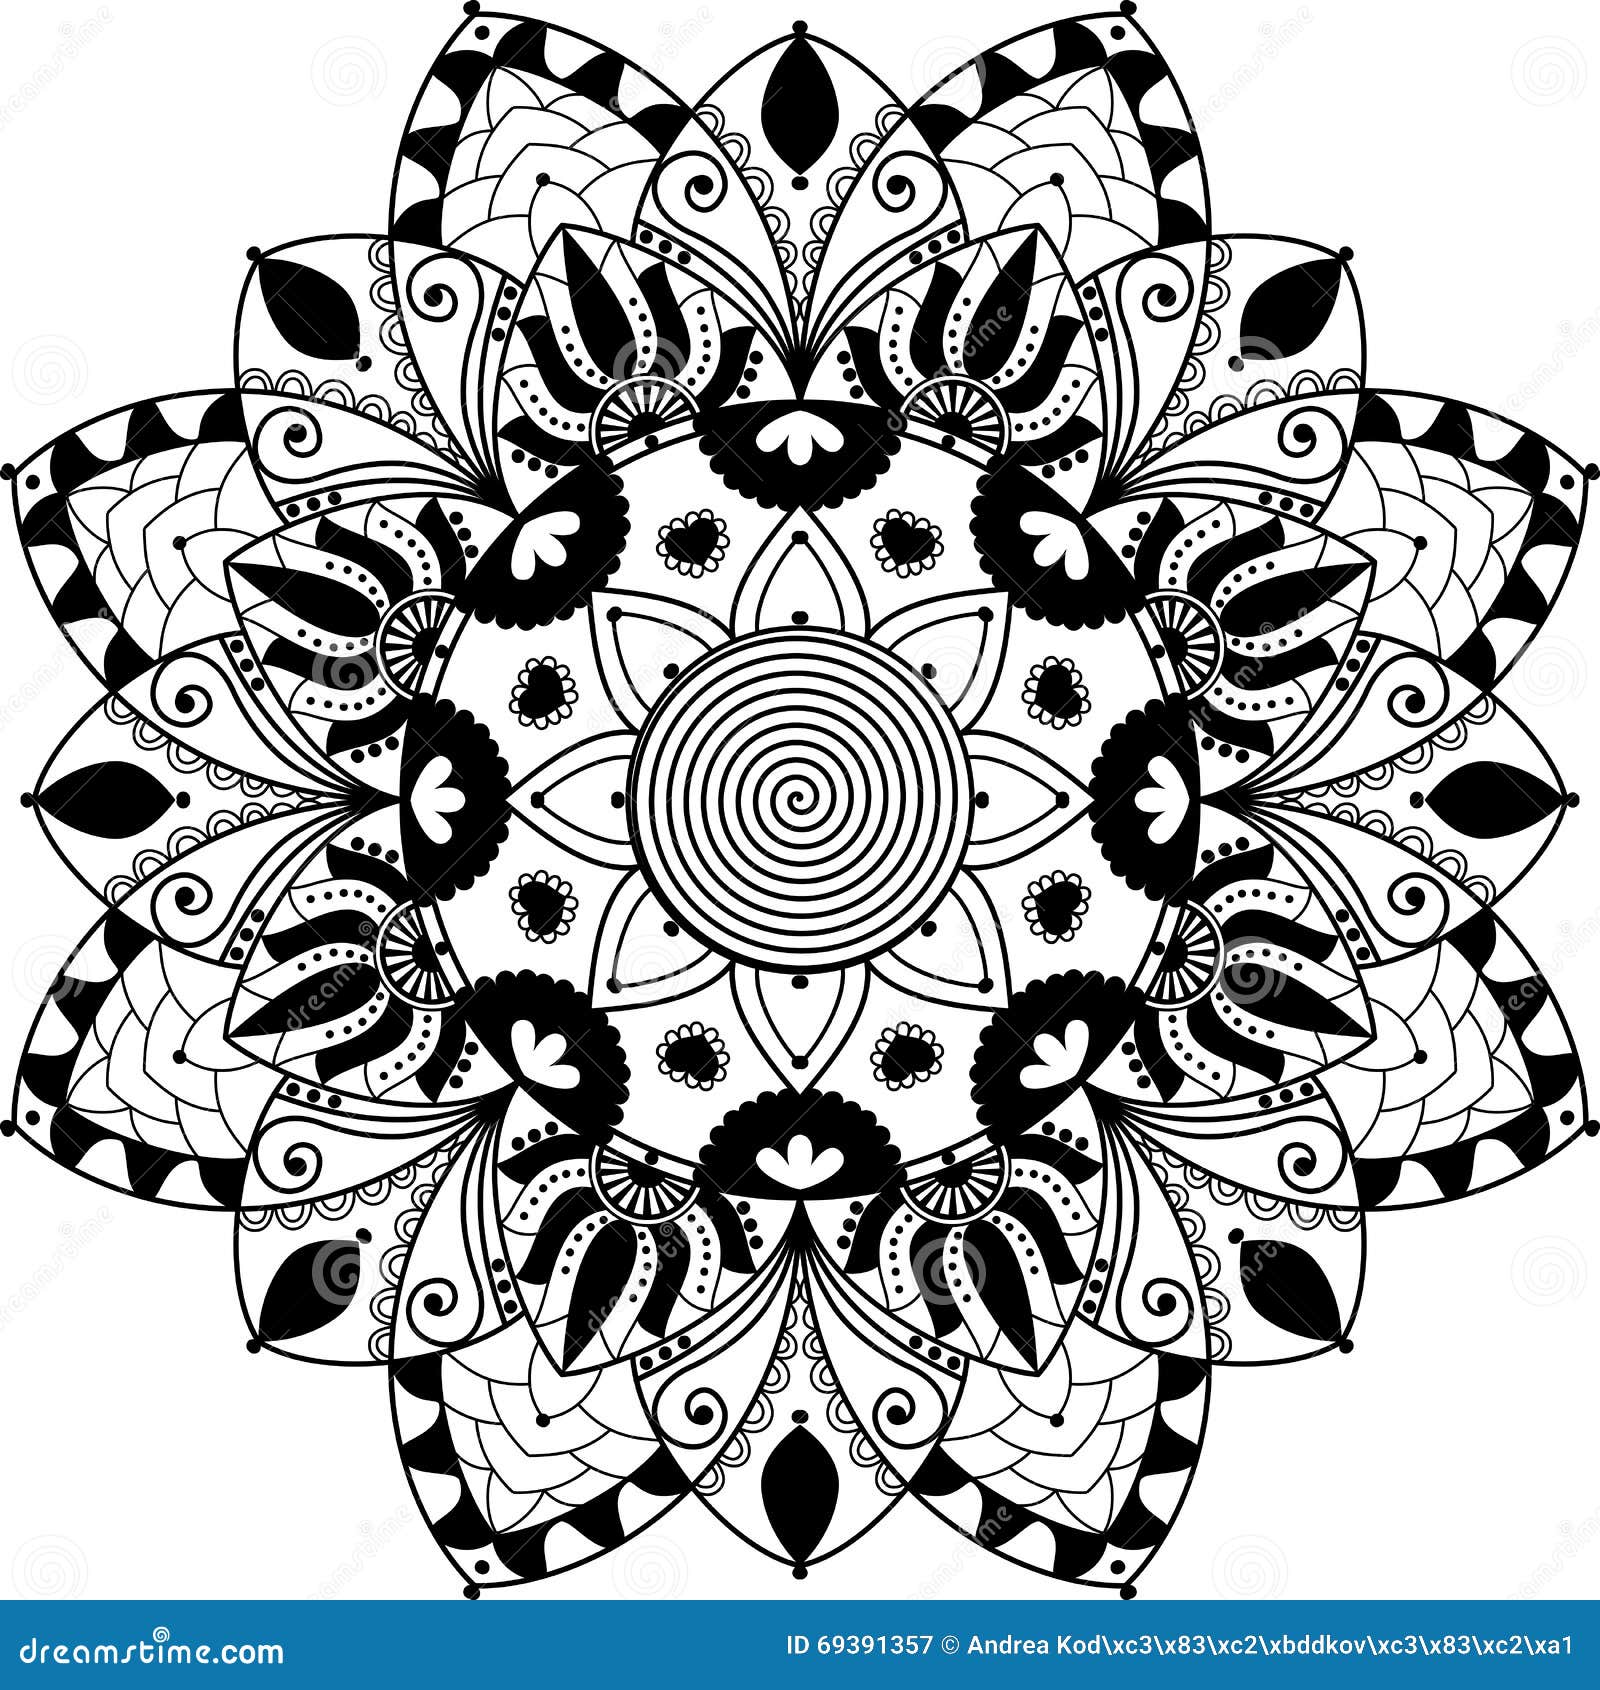 Download Mandala, Zentangle Inspired Illustration, Black And White ...